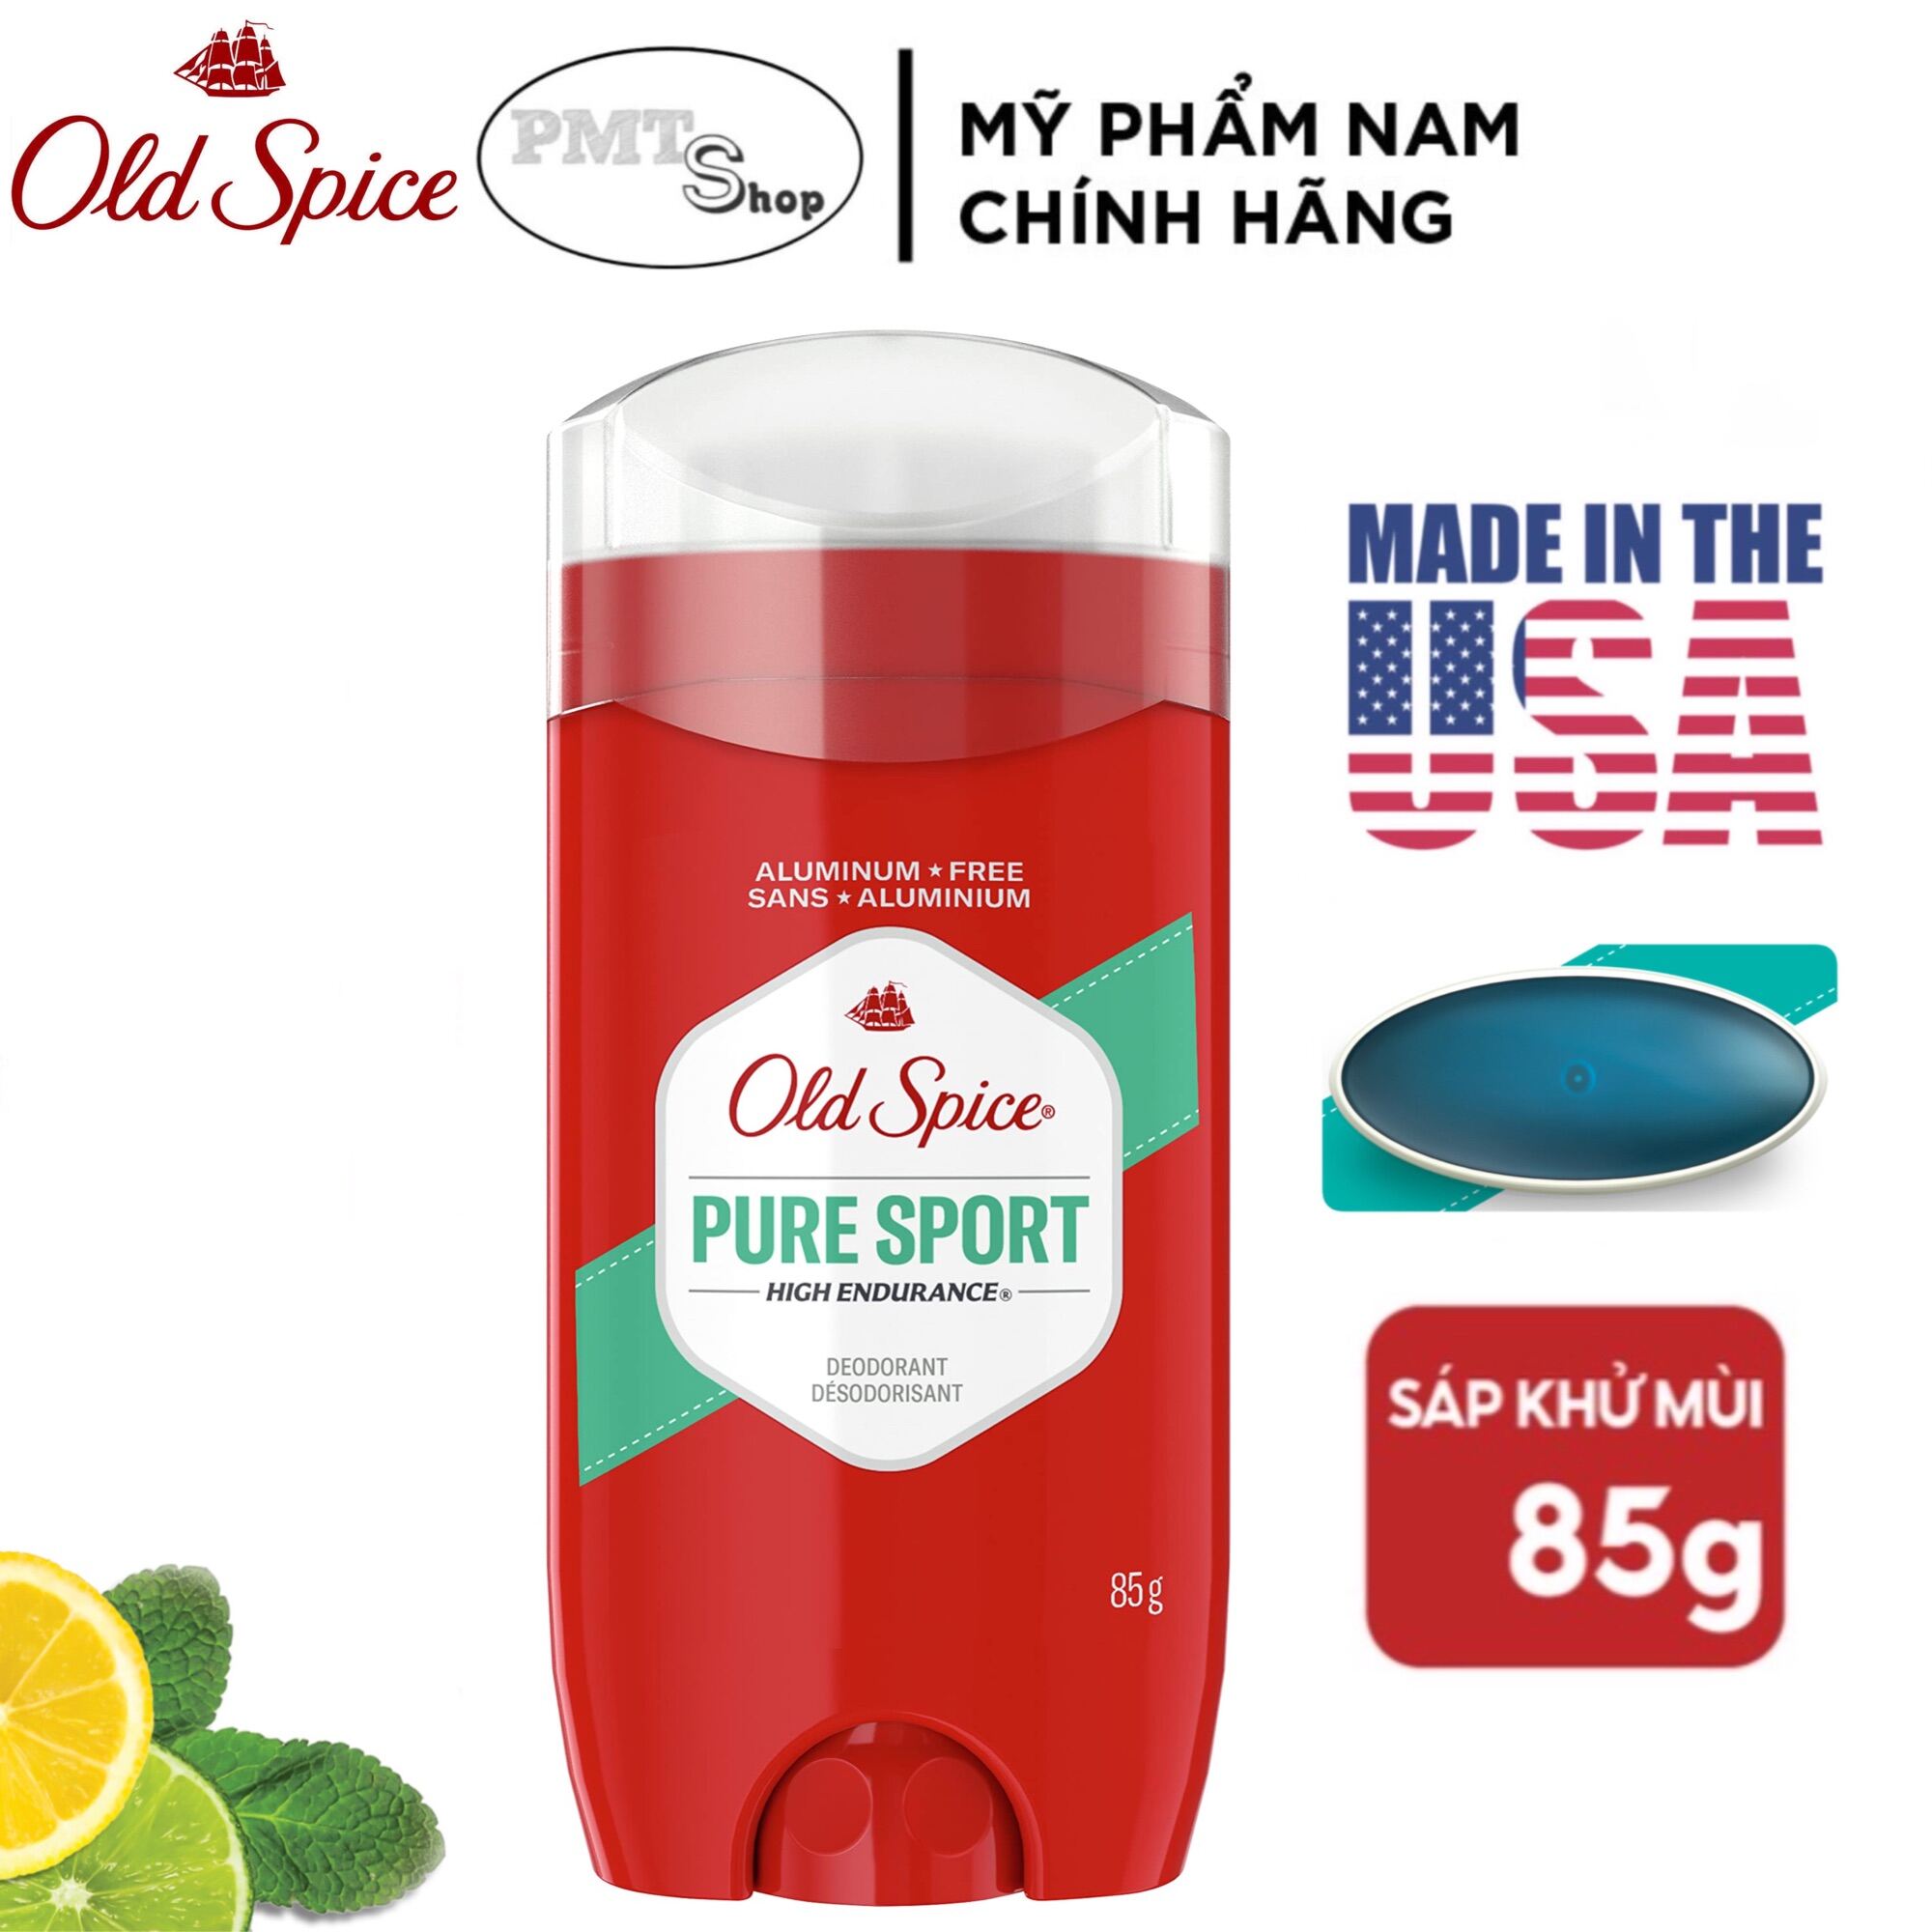 Lăn sáp khử mùi nam Old Spice Pure Sport 85g (sáp xanh) High Endurance Deodorant for Men 68g